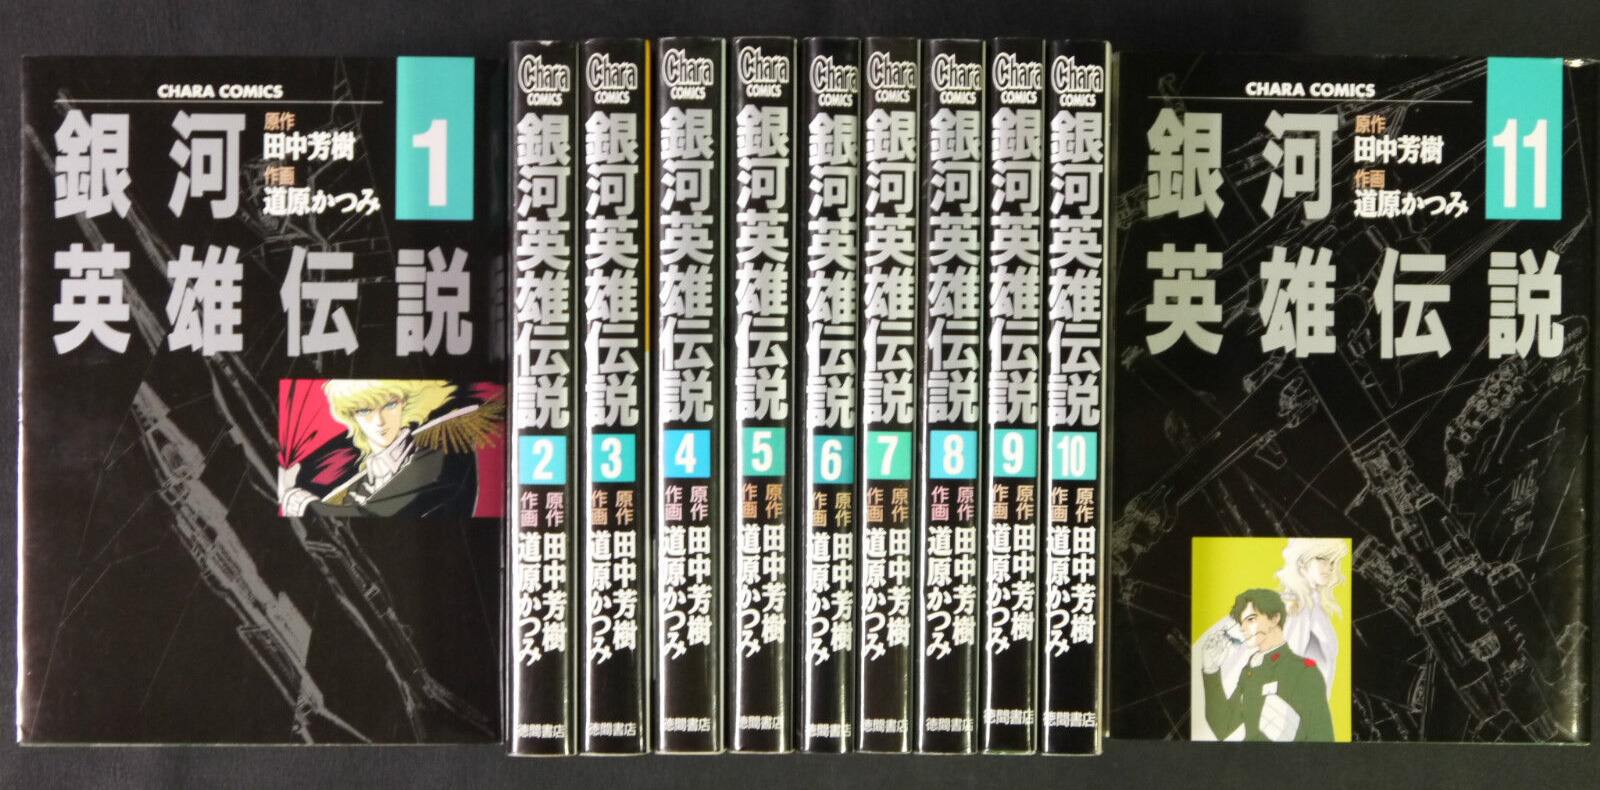 Legend of the Galactic Heroes / Ginga eiyuu densetsu manga Vol.1-11 Set